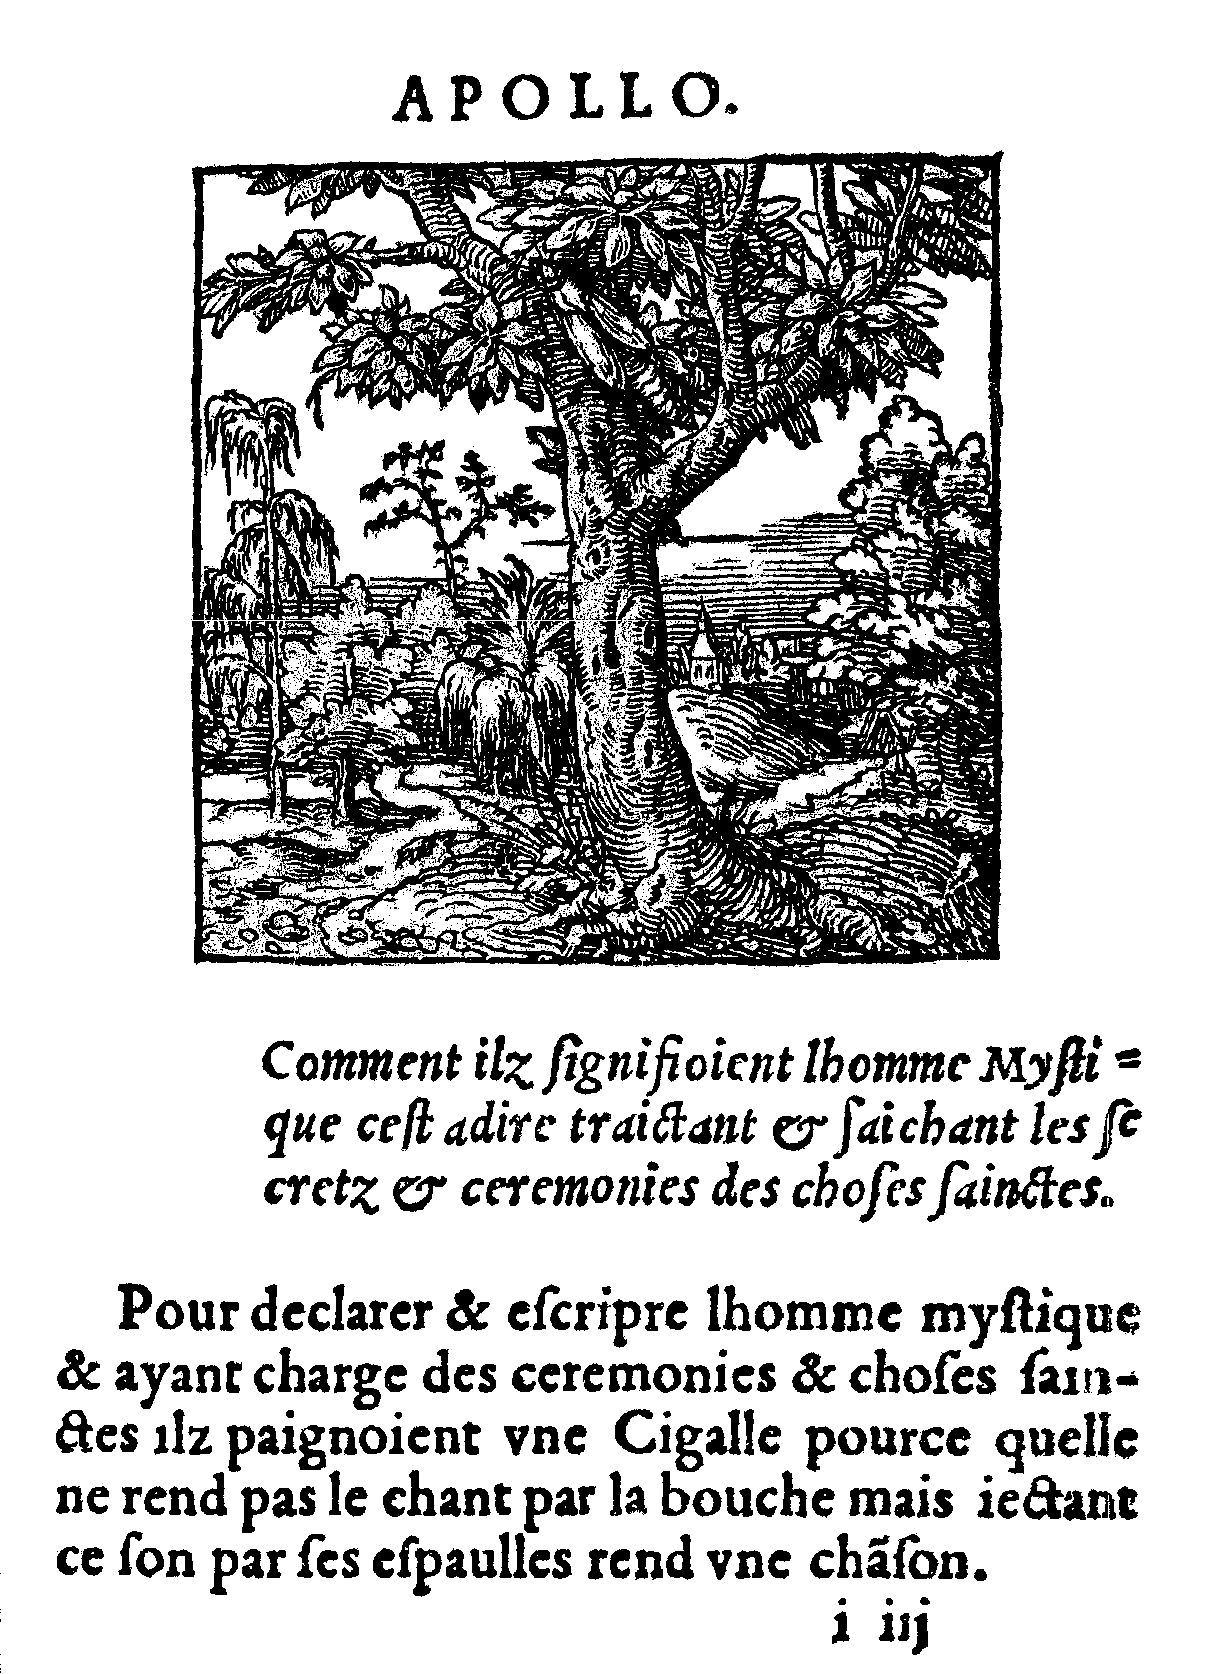 Horapollo, La cigale (Orus Apollo, Kerver, 1543)